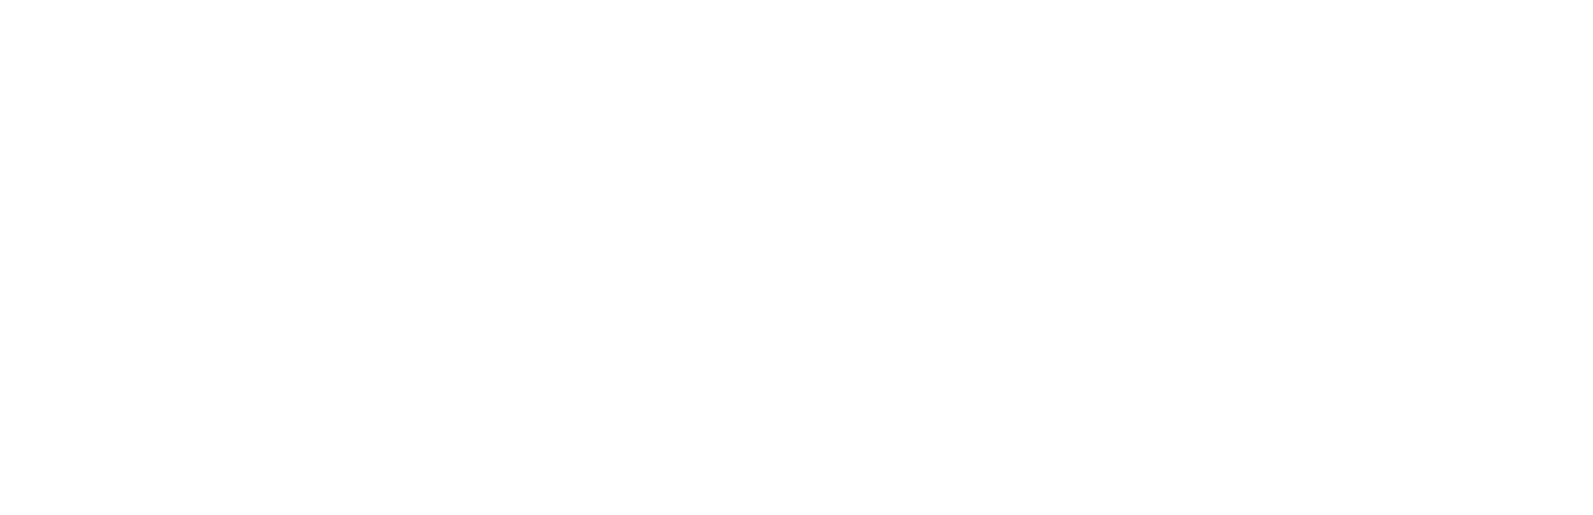 IronNet logo large for dark backgrounds (transparent PNG)